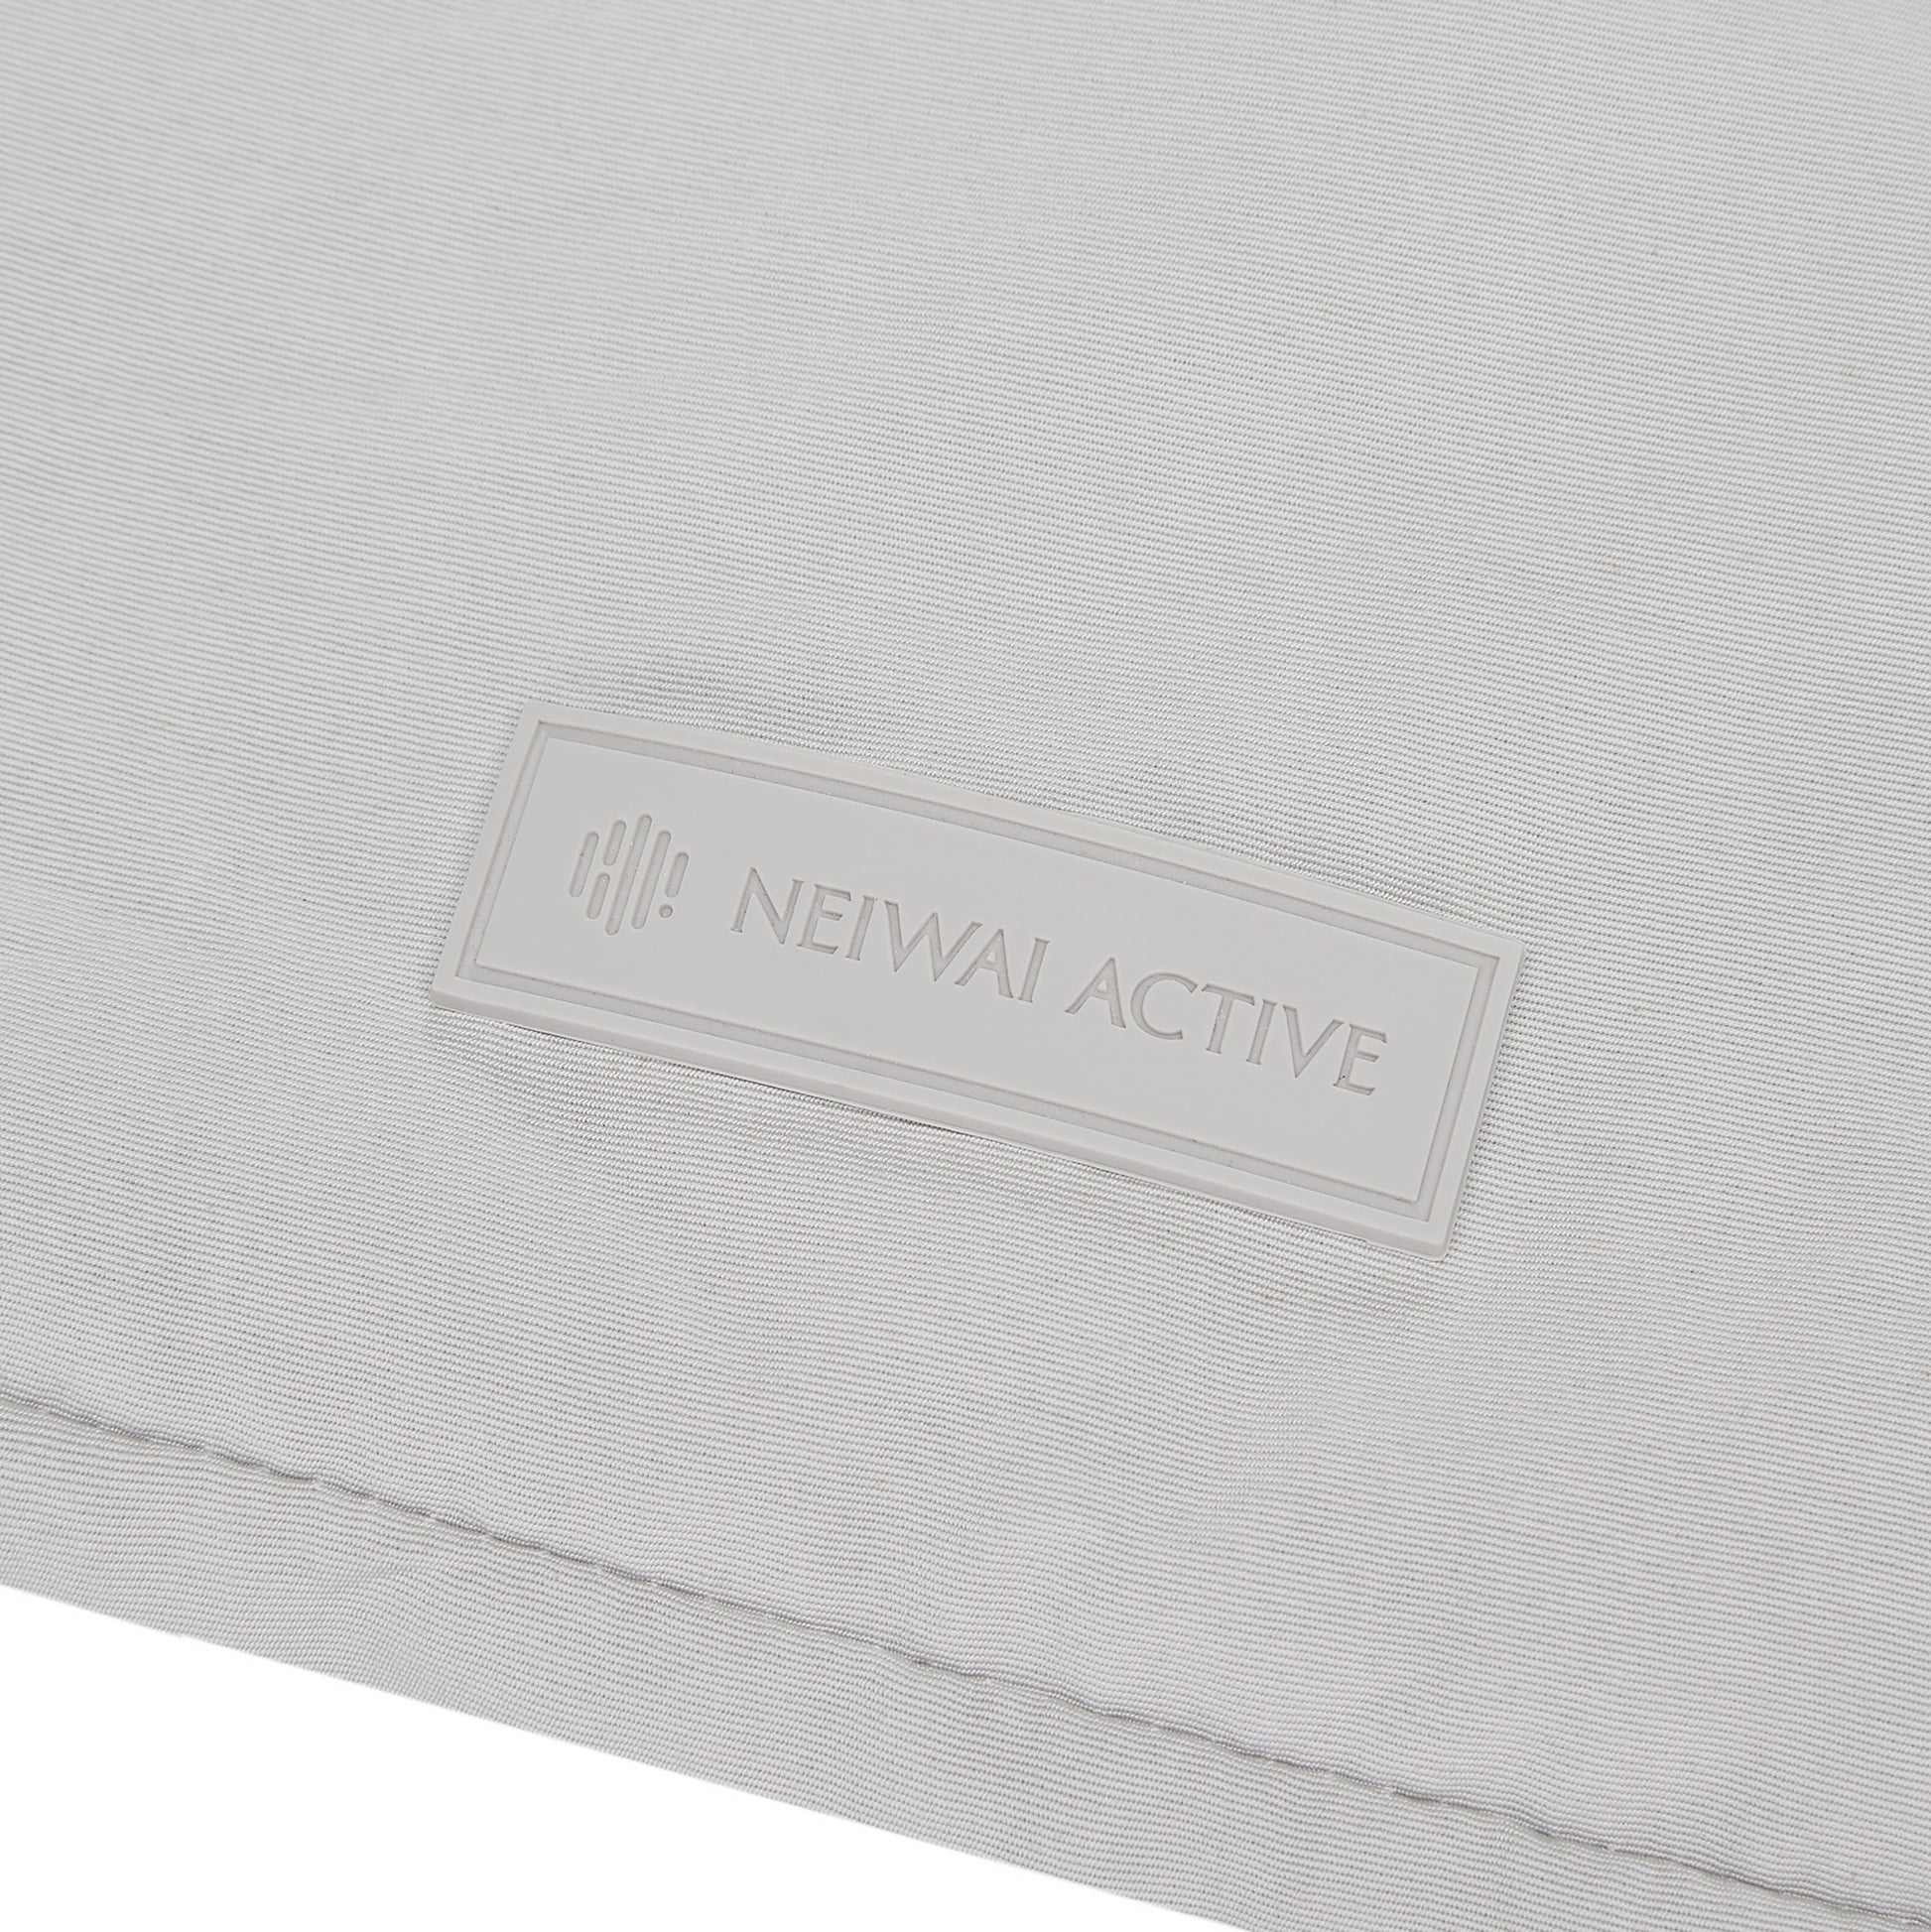 neiwai active logo on grey bag